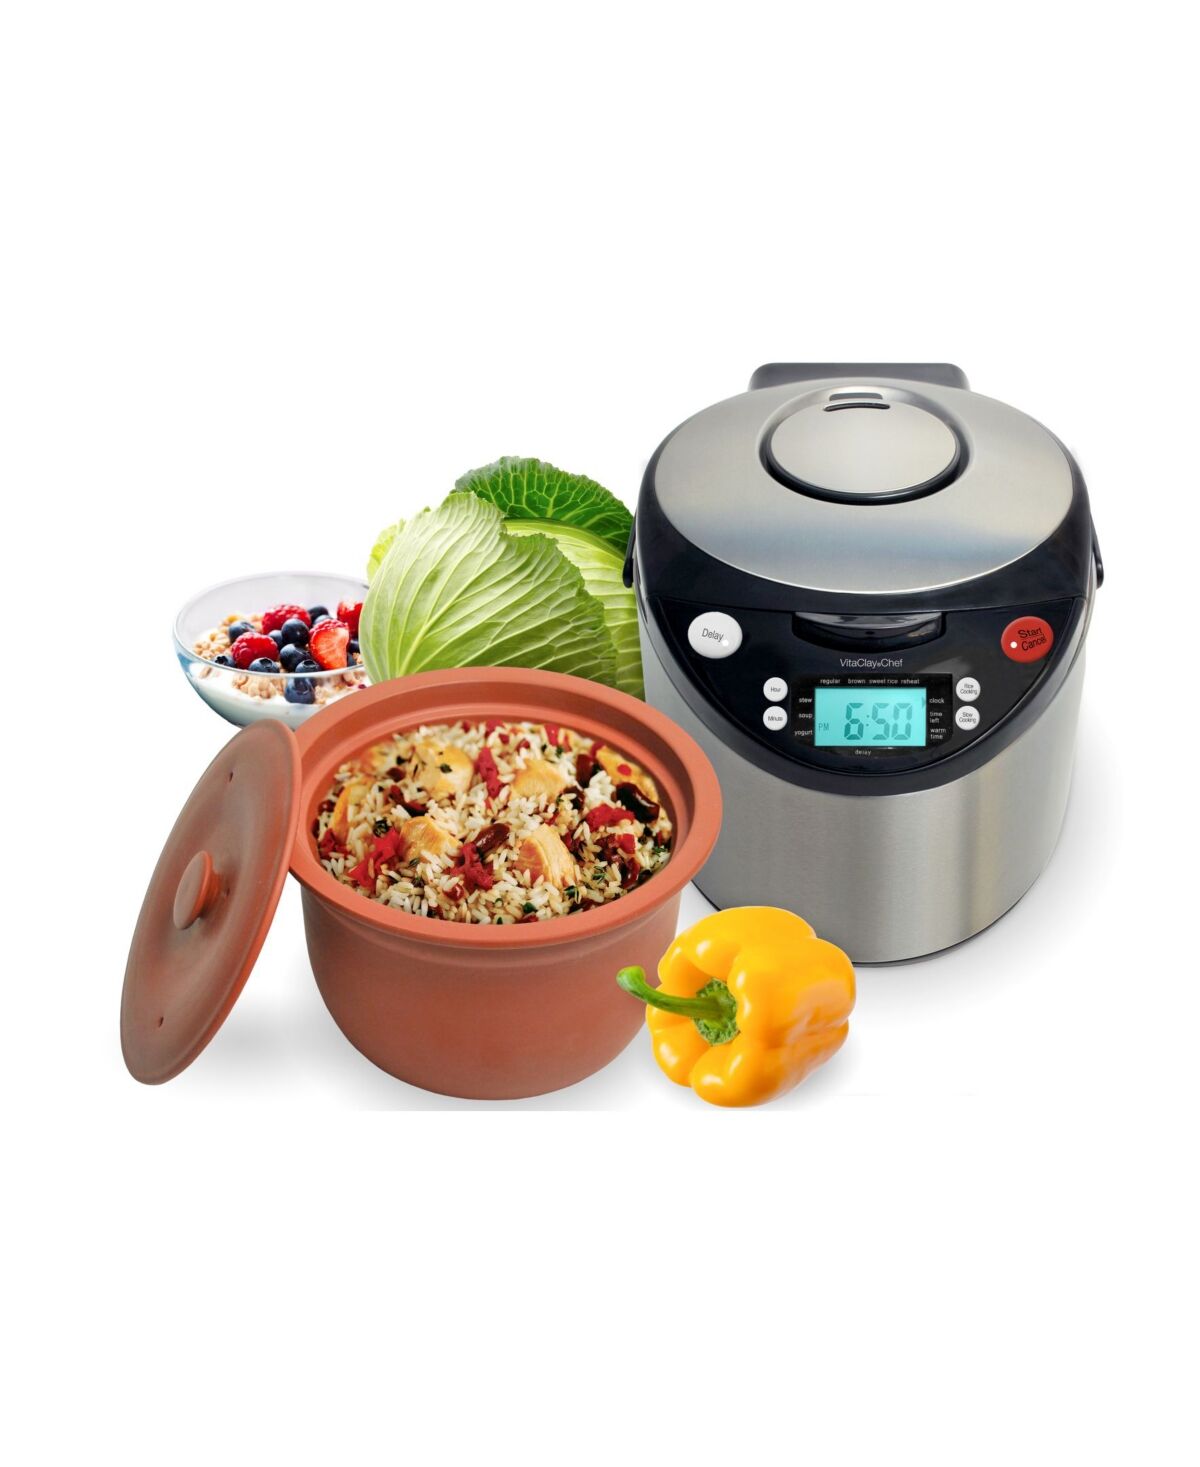 Vitaclay Smart Digital Express - A Rice Slow Cooker, A Digital Steamer and A Yogurt Maker, 3.2 Qt - Silver